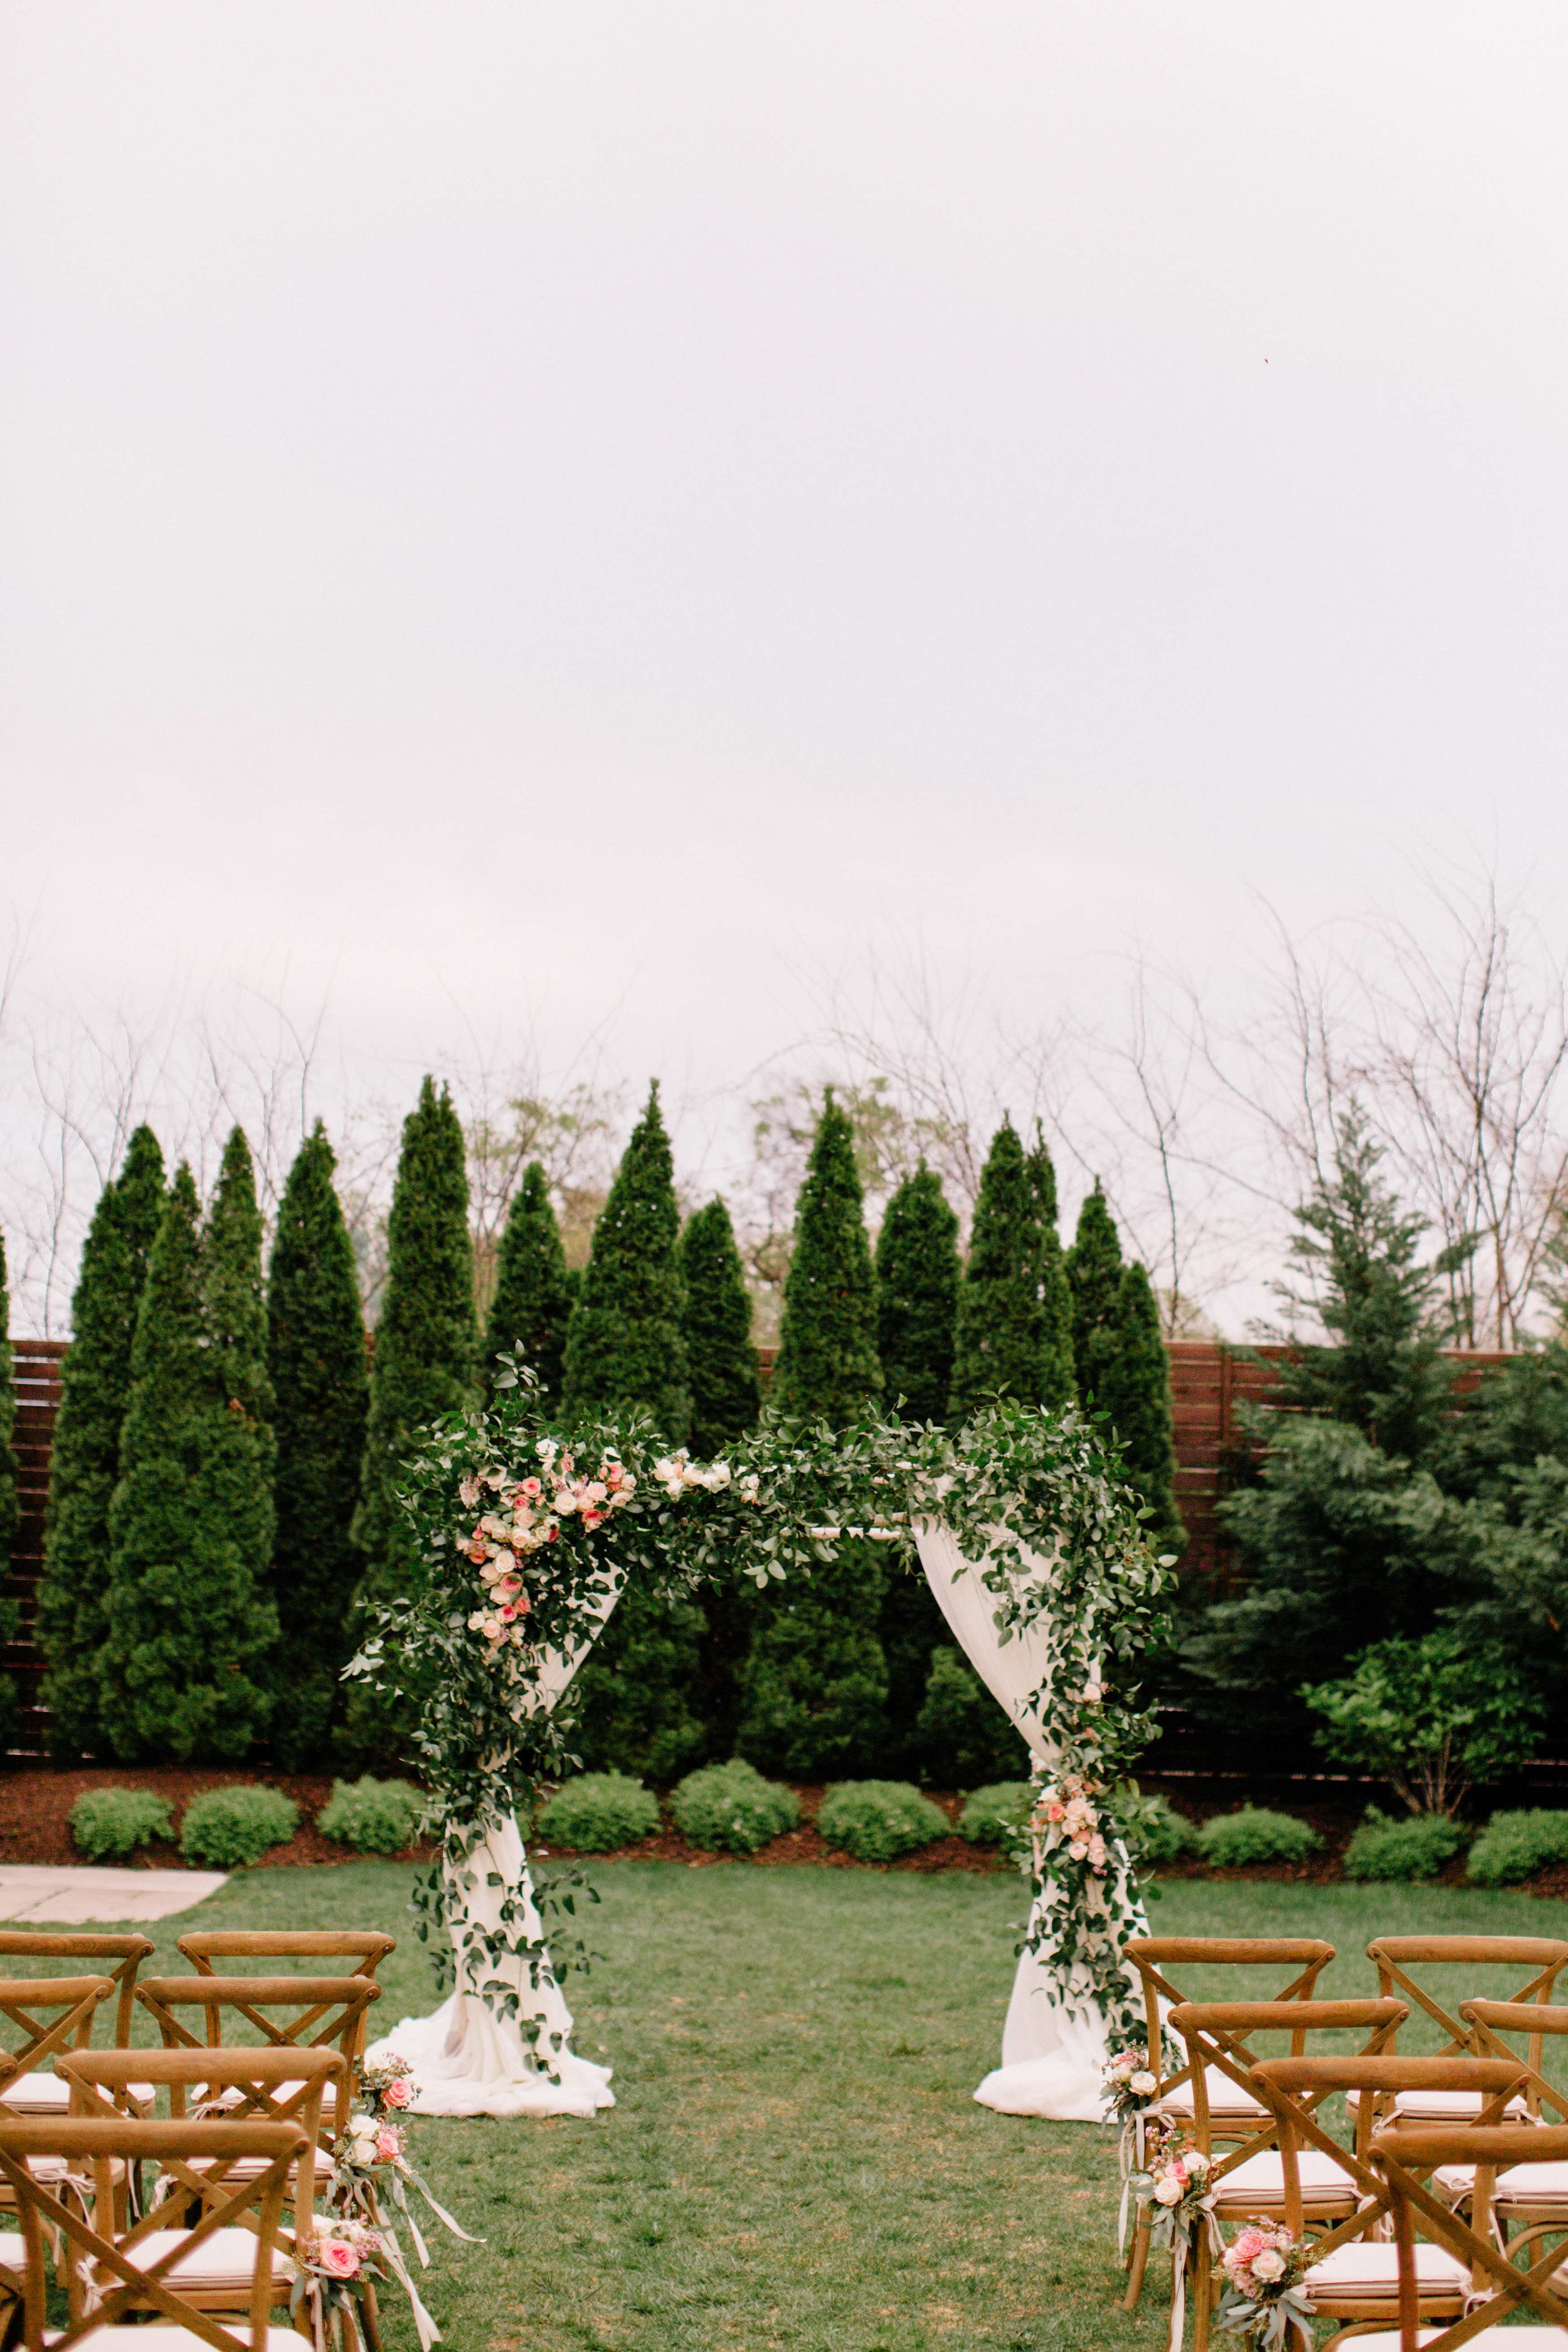 Lush greenery wedding chuppah / arch, Nashville Floral Design